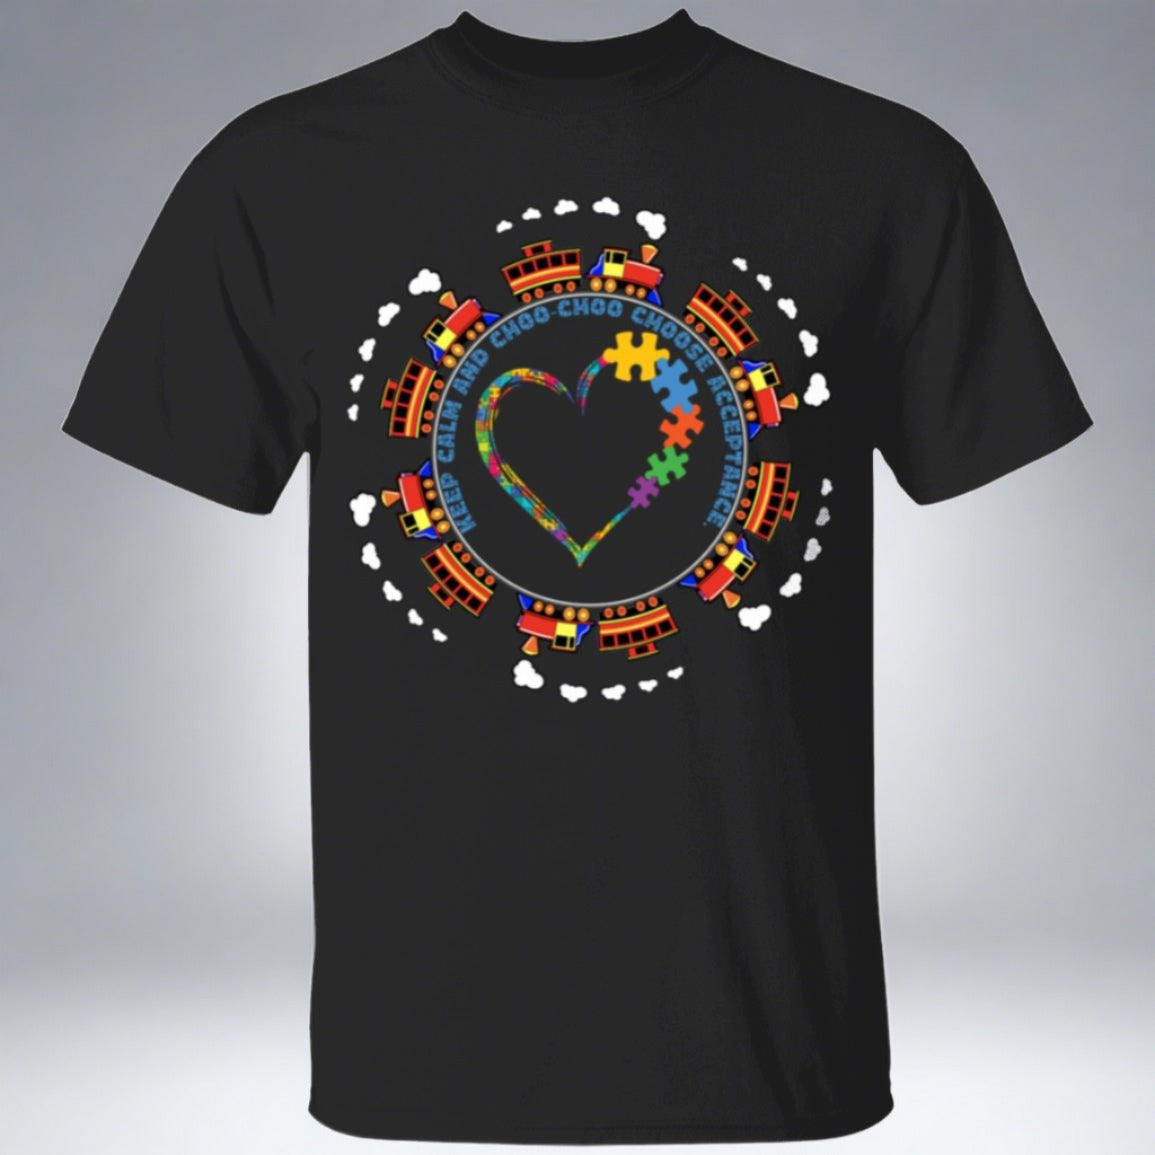 Embrace Diversity Autism Awareness Youth Classic 100% Cotton T-Shirt